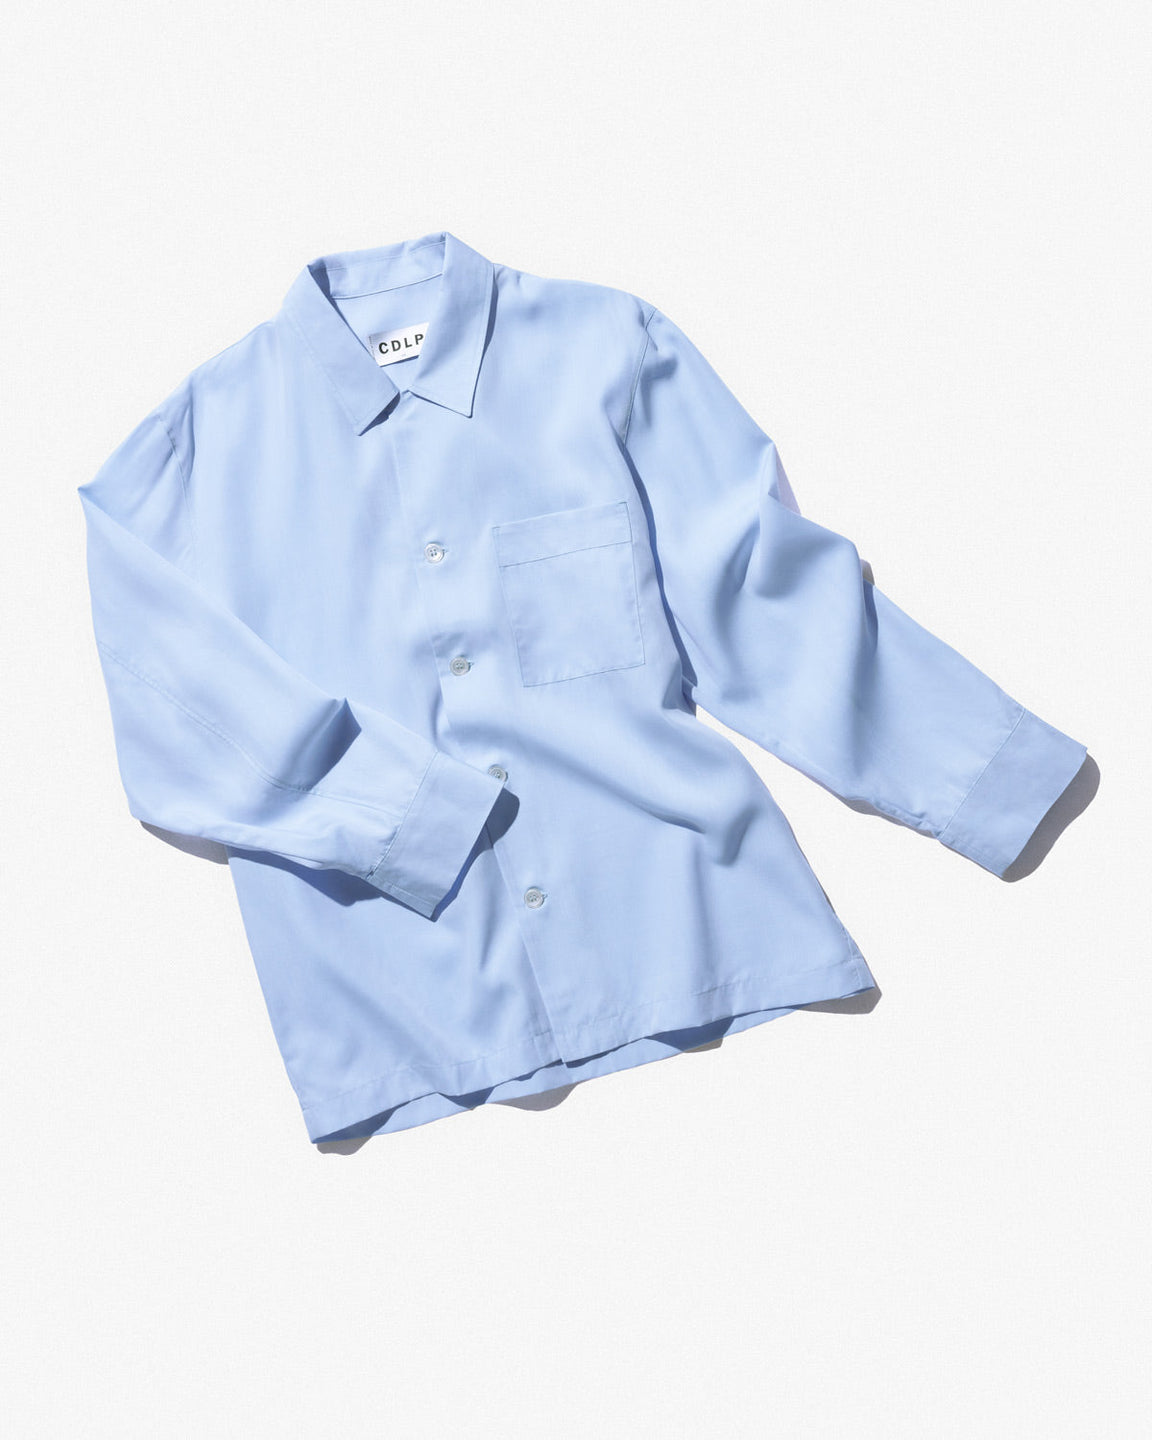 CDLP Pyjama Shirt in Sky Blue